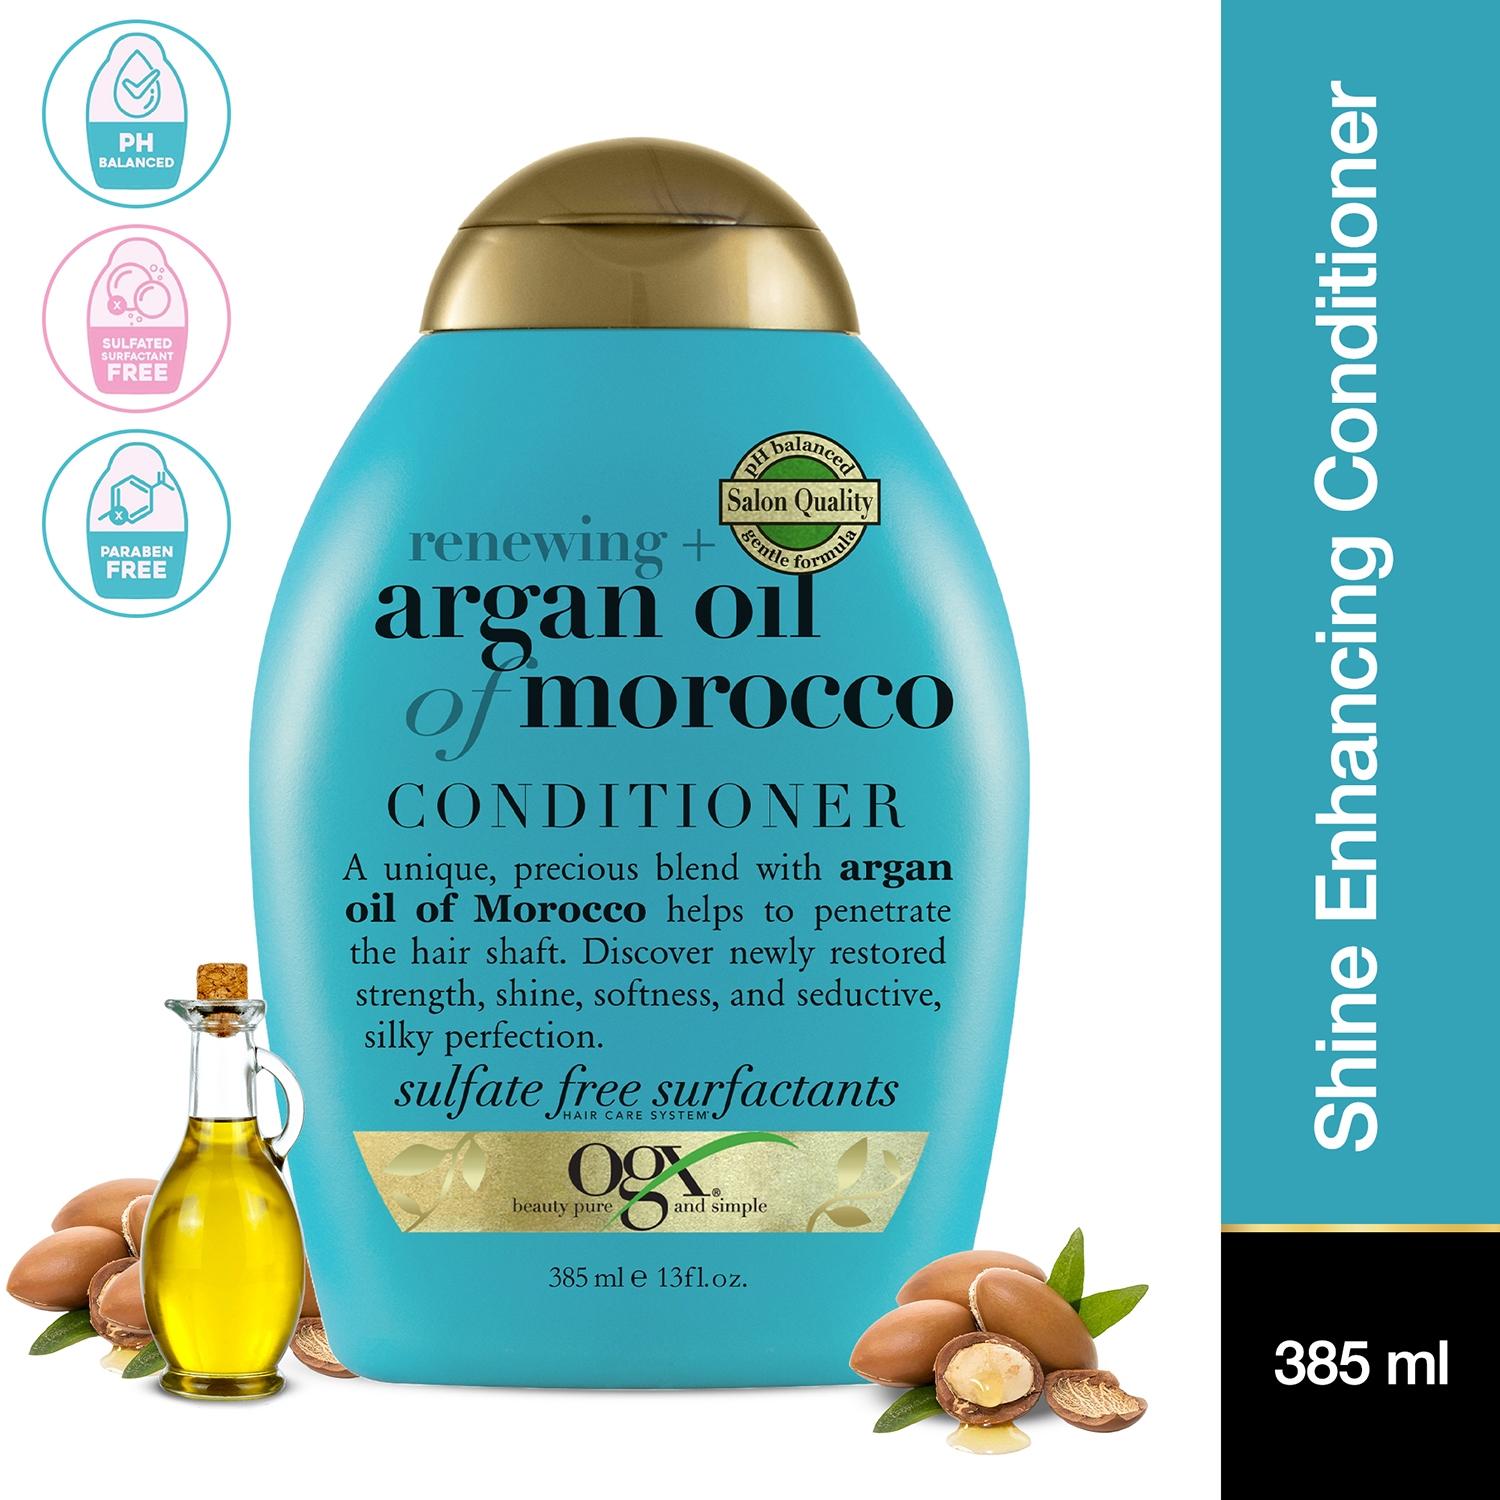 ogx renewing argan oil of morocco conditioner (385ml)